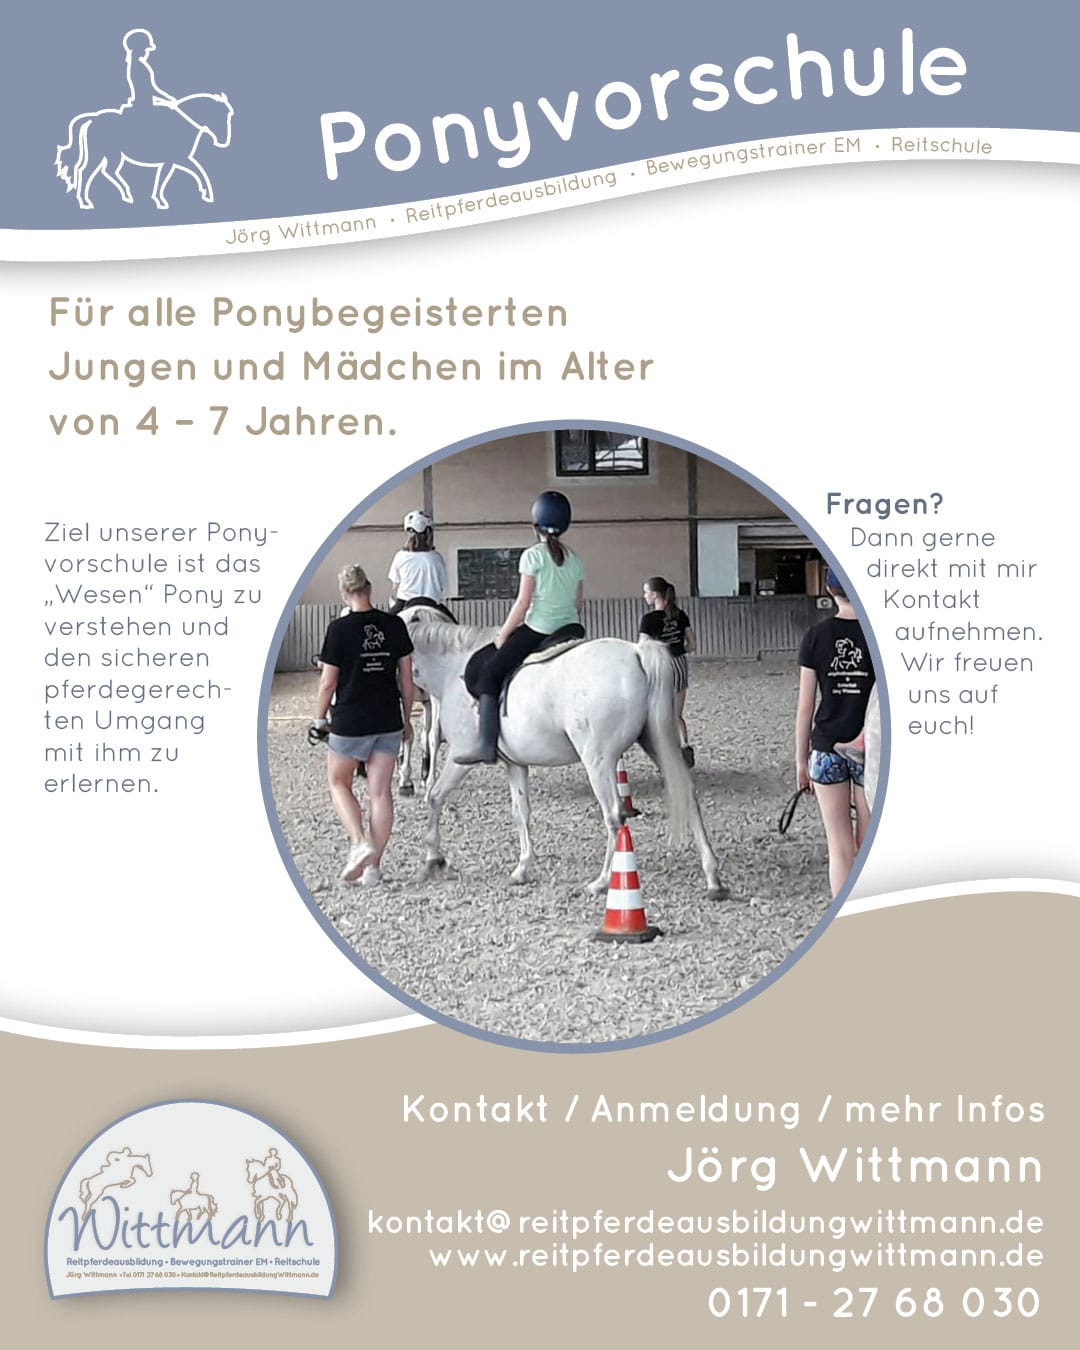 Wittmann Ponyvorschule